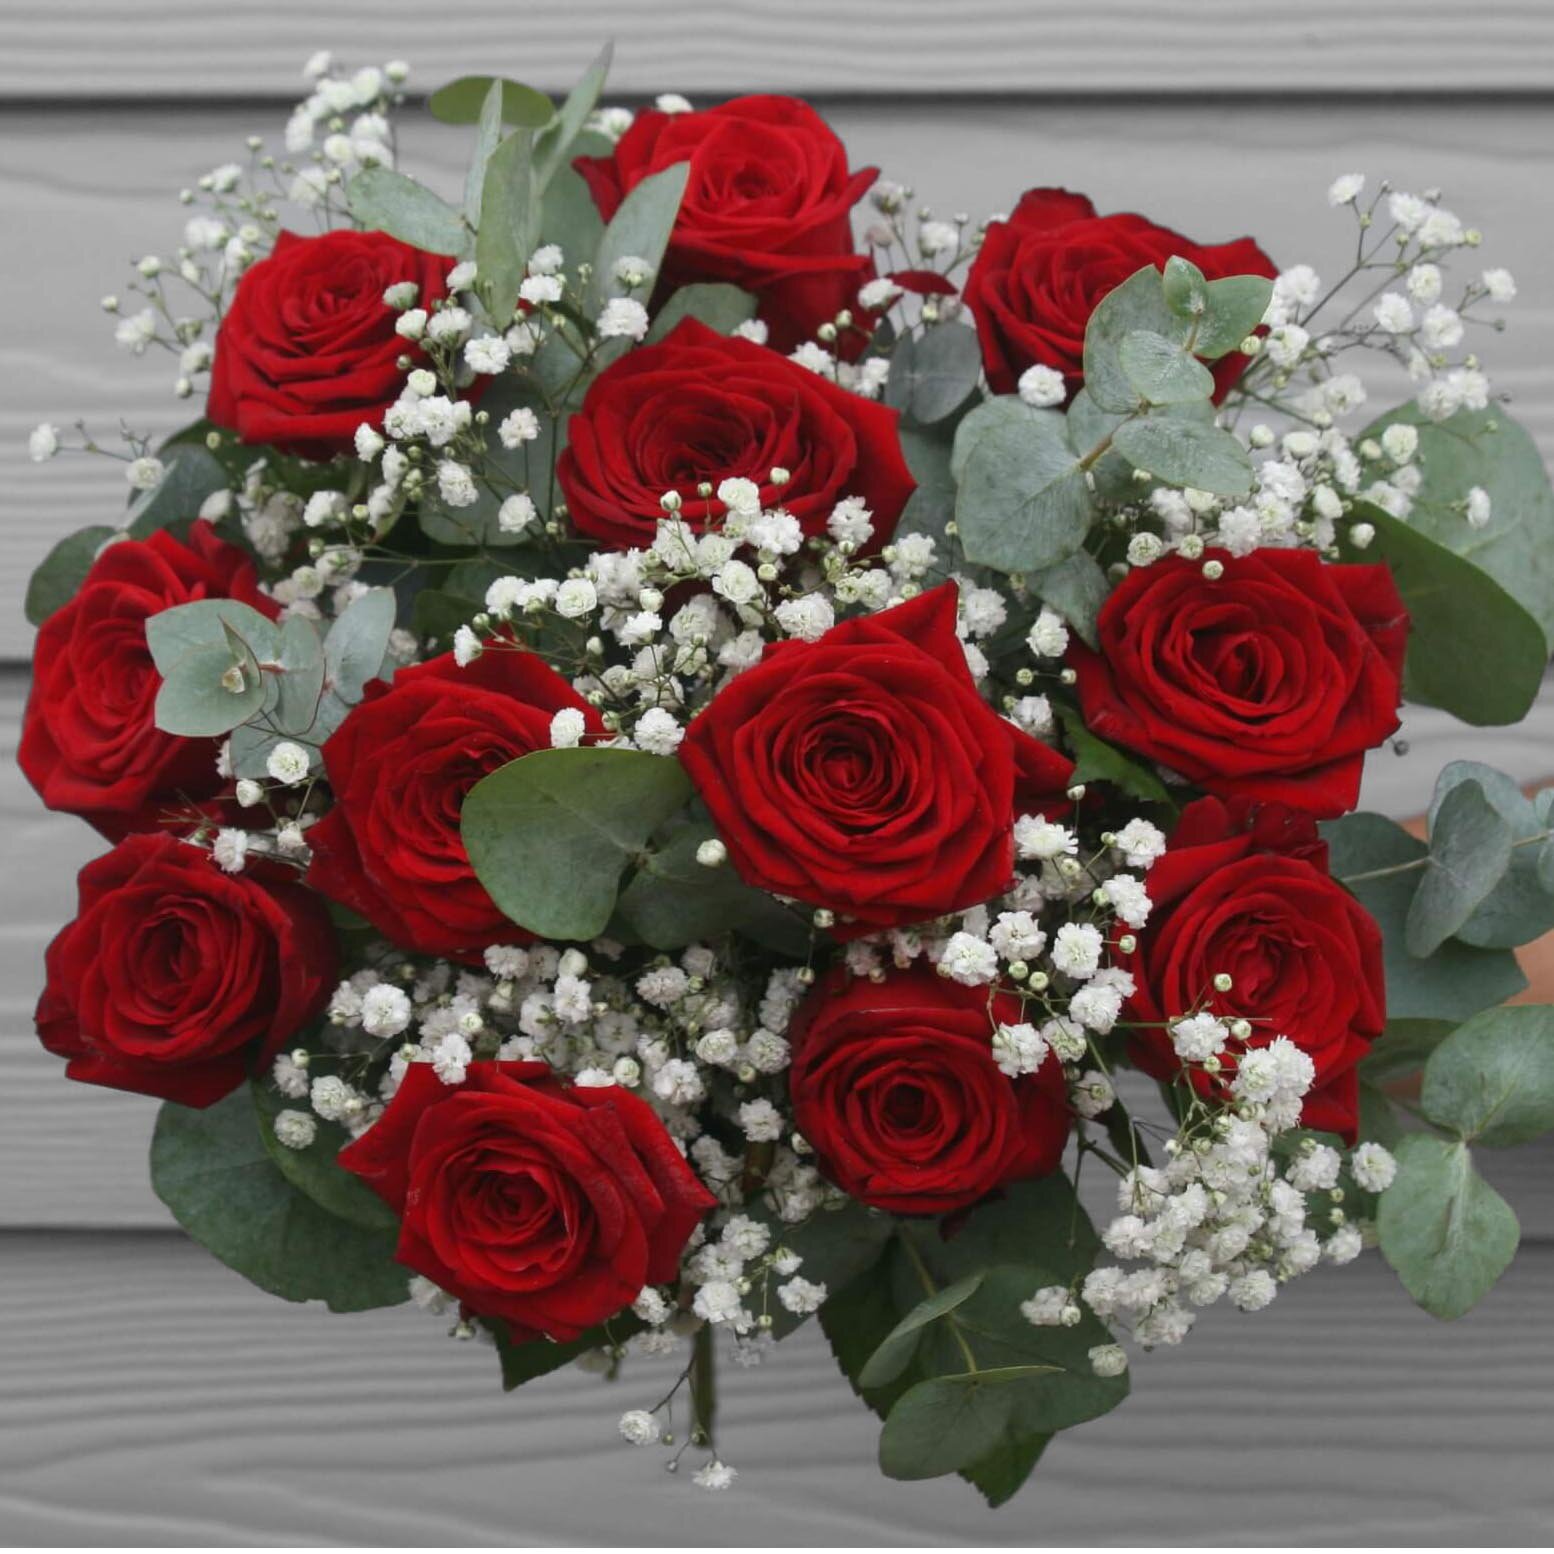 ROMANTIC ROSE BOUQUET — Fox red flowers